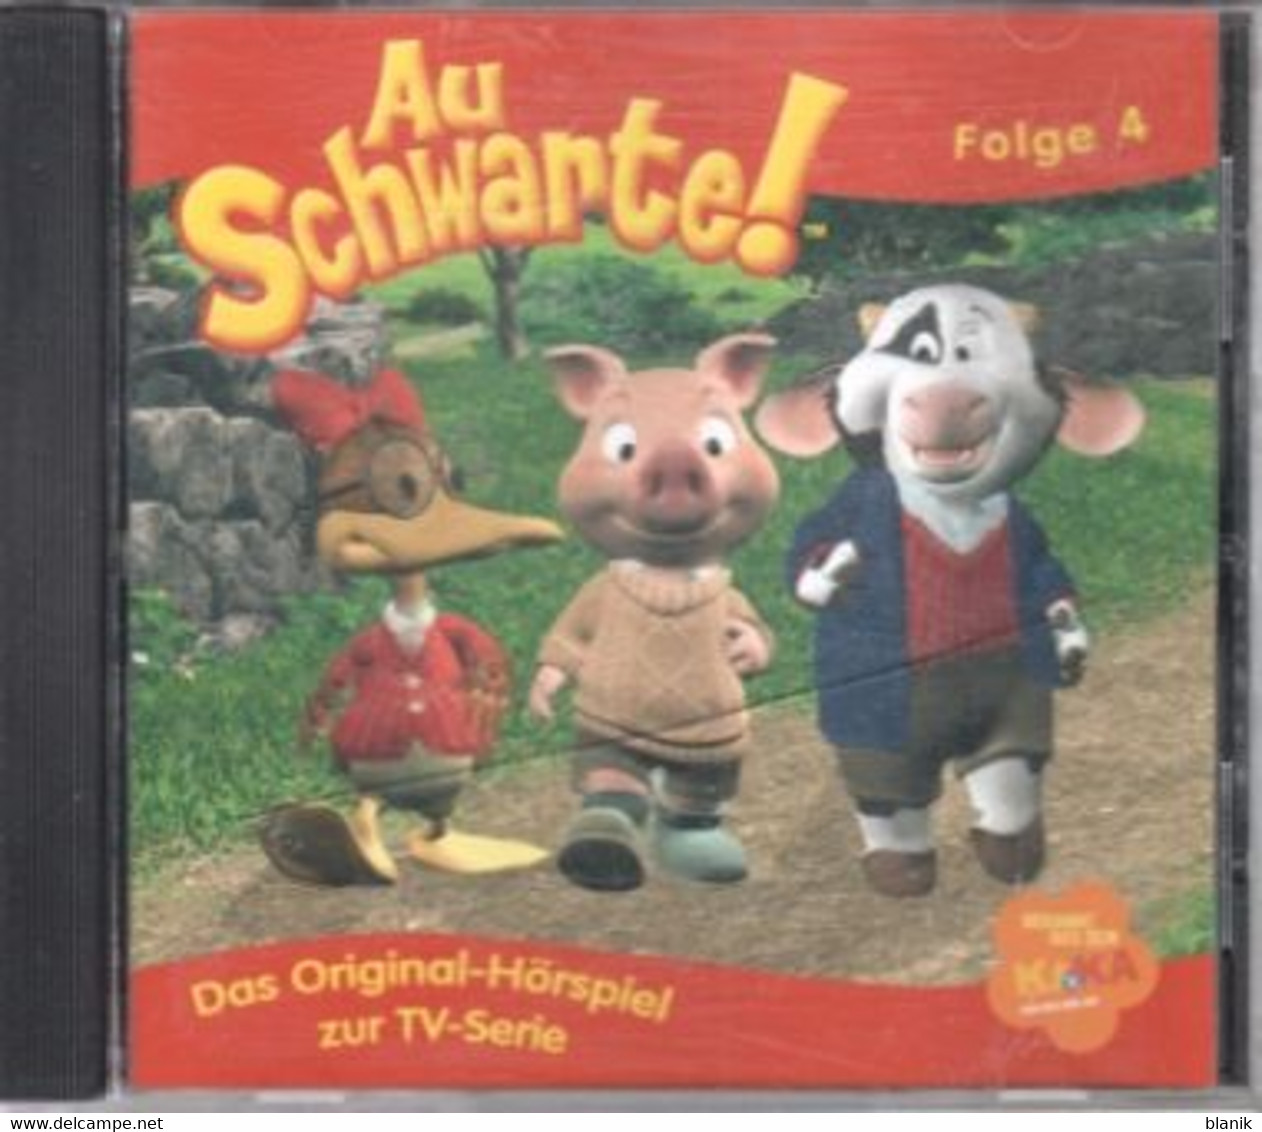 Gramofon - Au Schwarte! - Folge 4 - Other - German Music